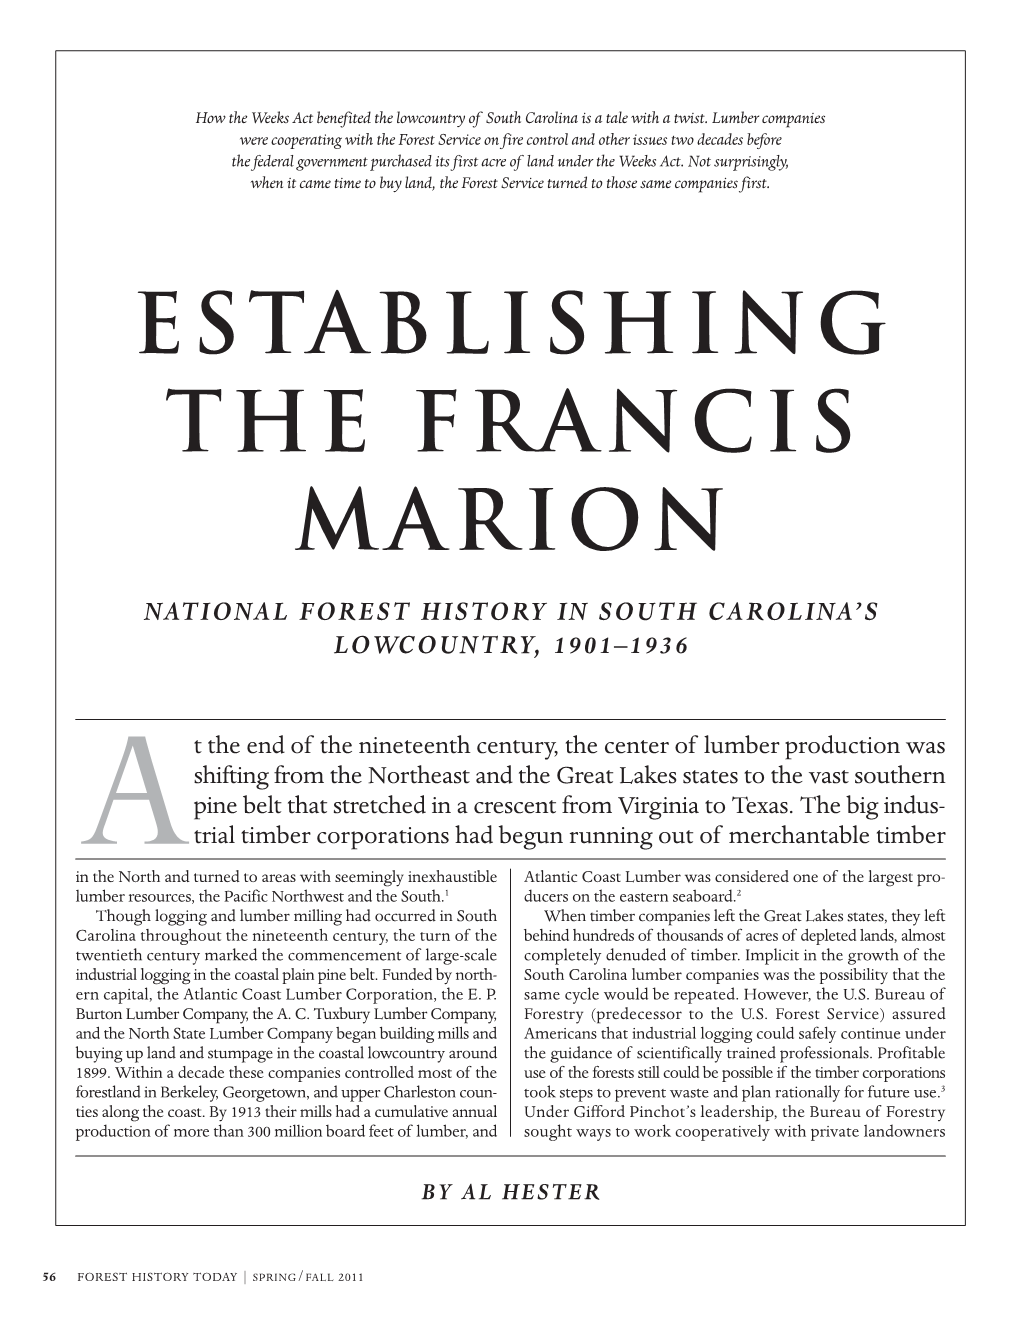 Establishing the Francis Marion